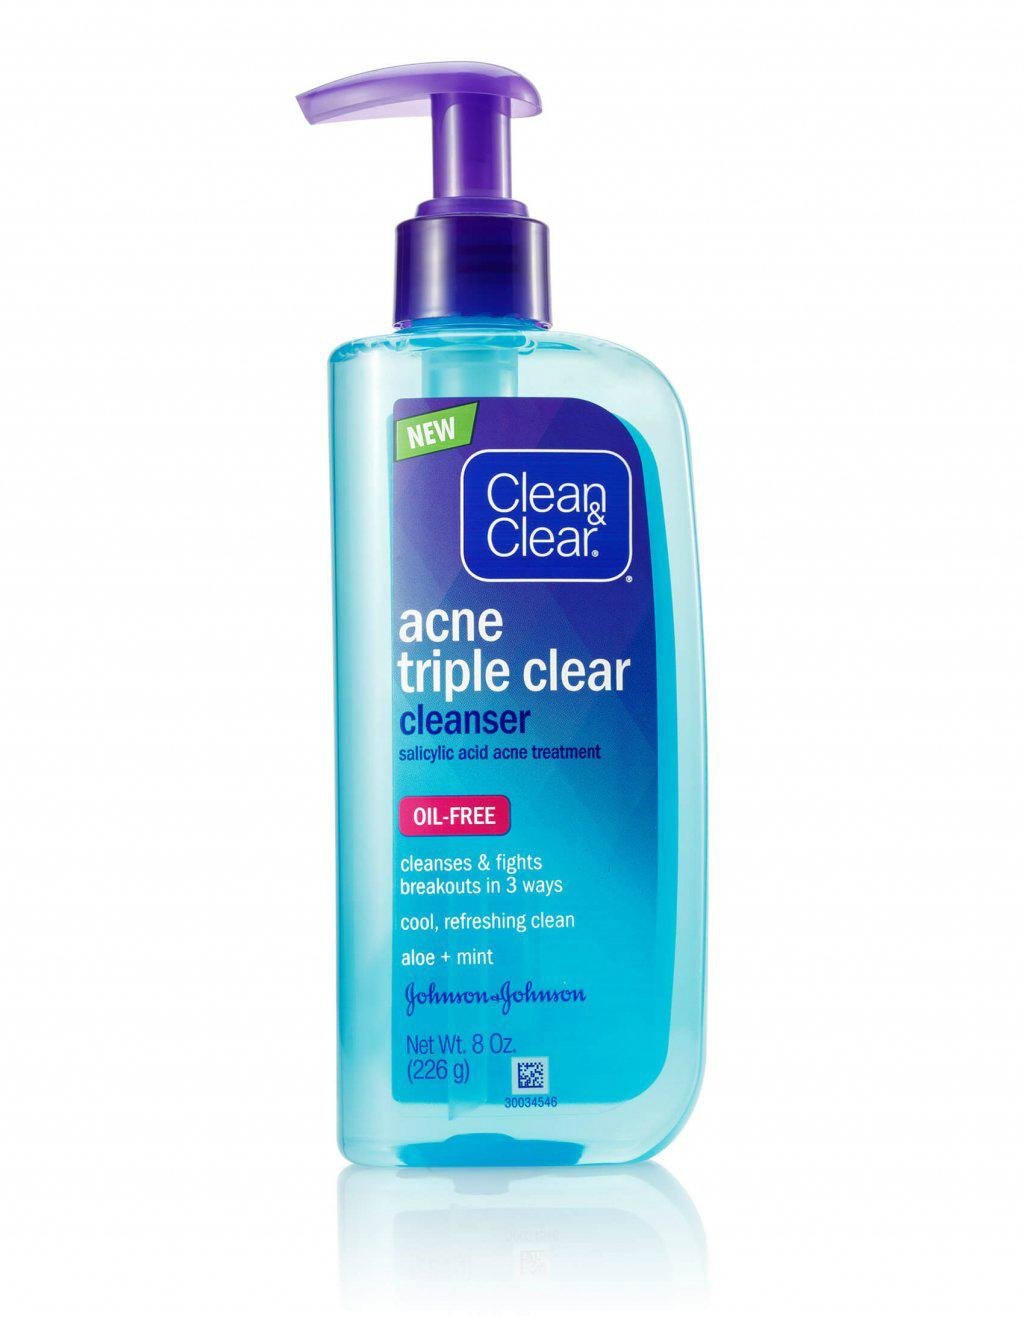 Acne Triple Clear Cleanser